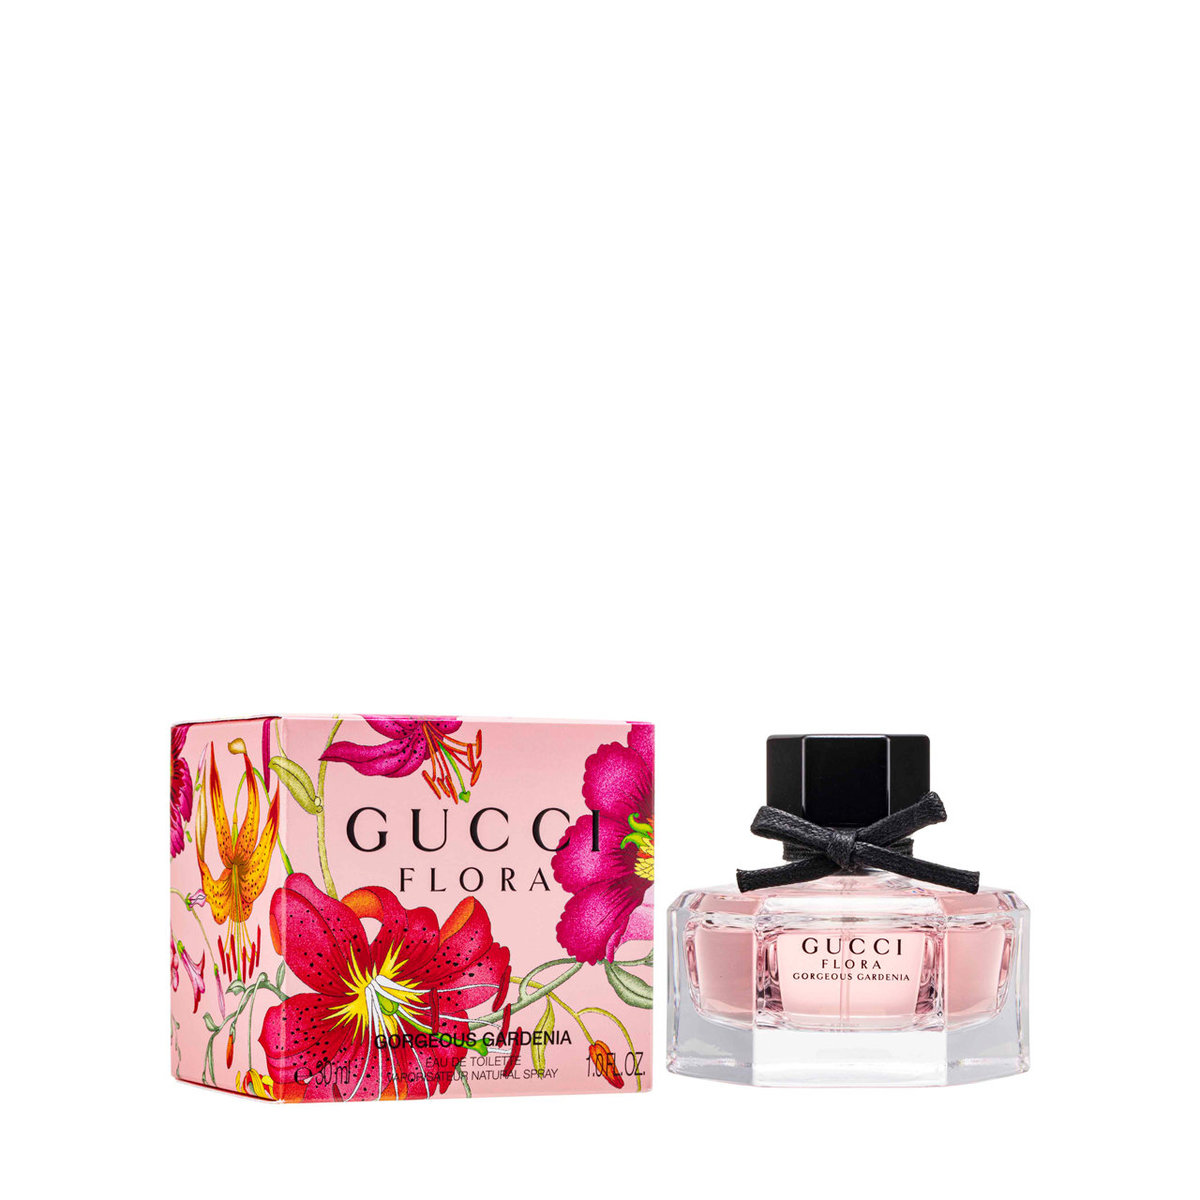 gucci flora 30ml price